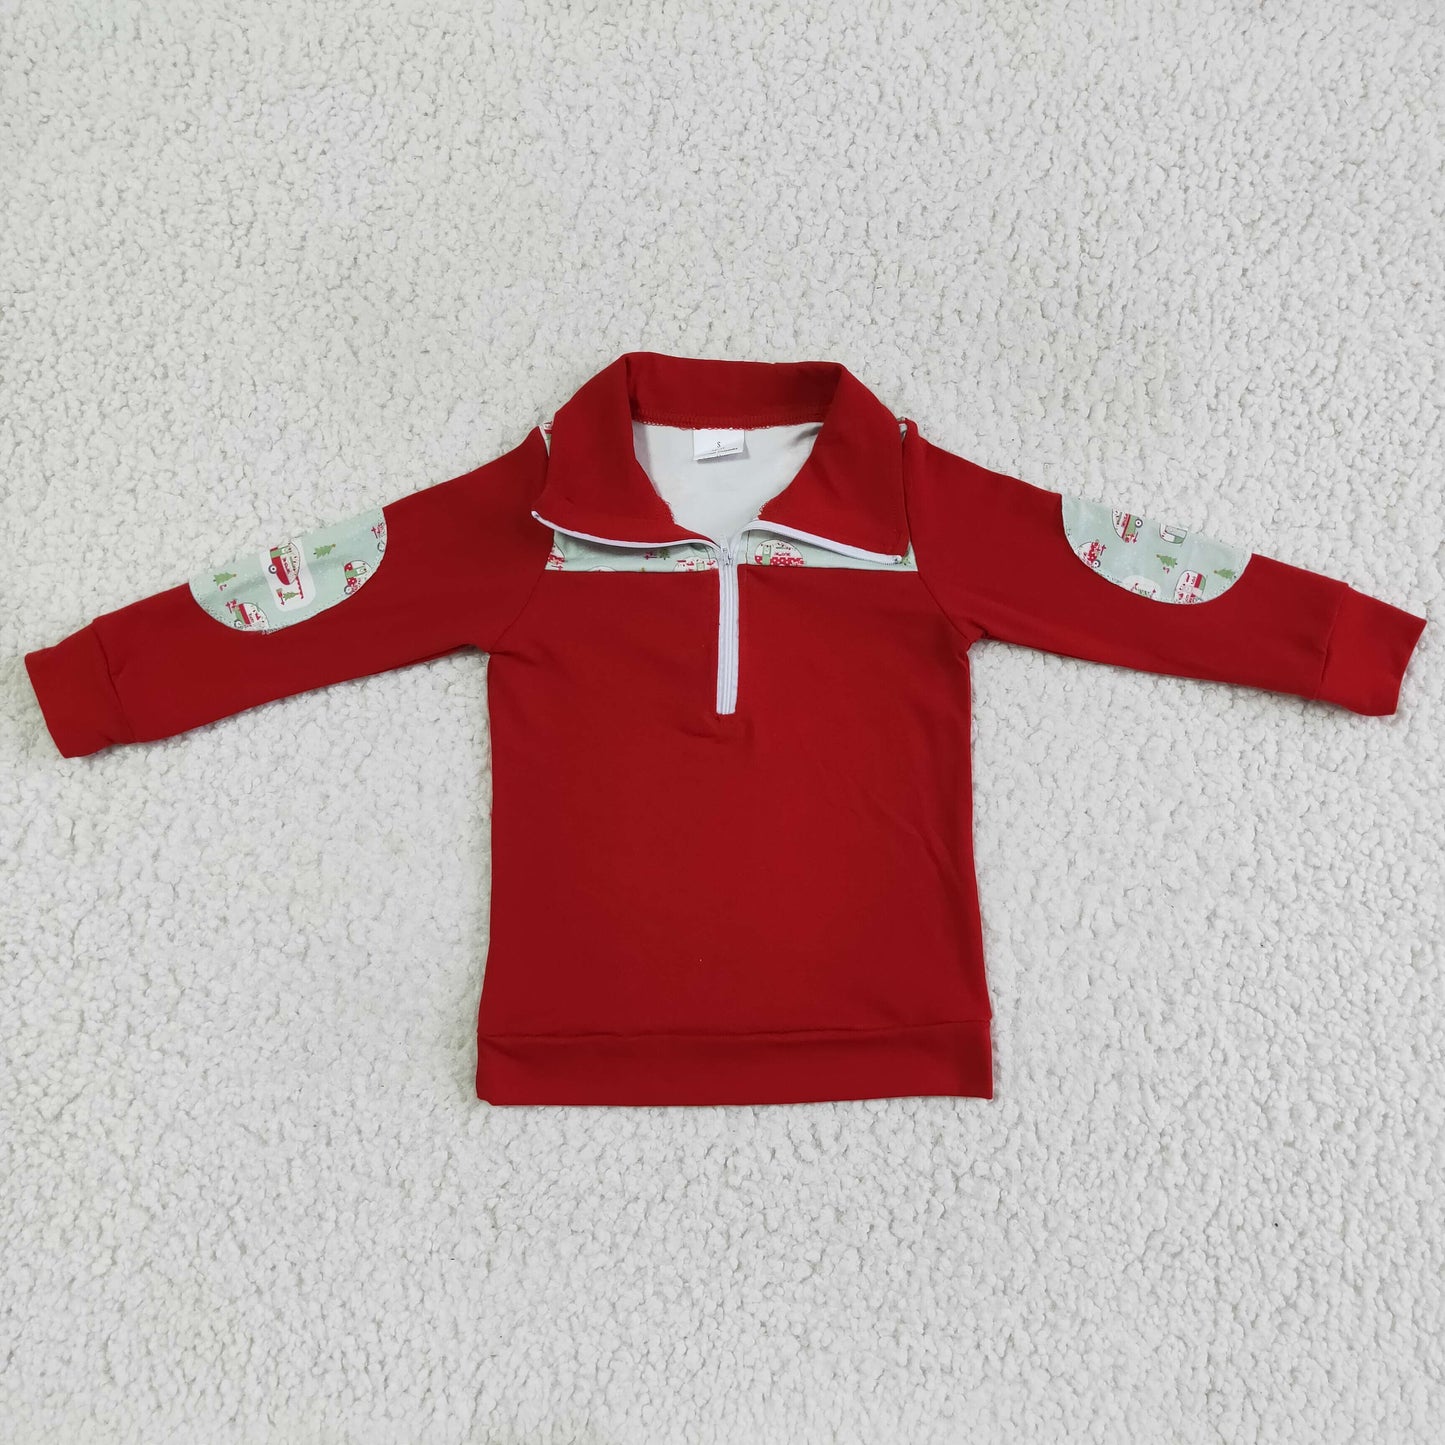 Camping red long sleeve kids Christmas zipper pullover shirt